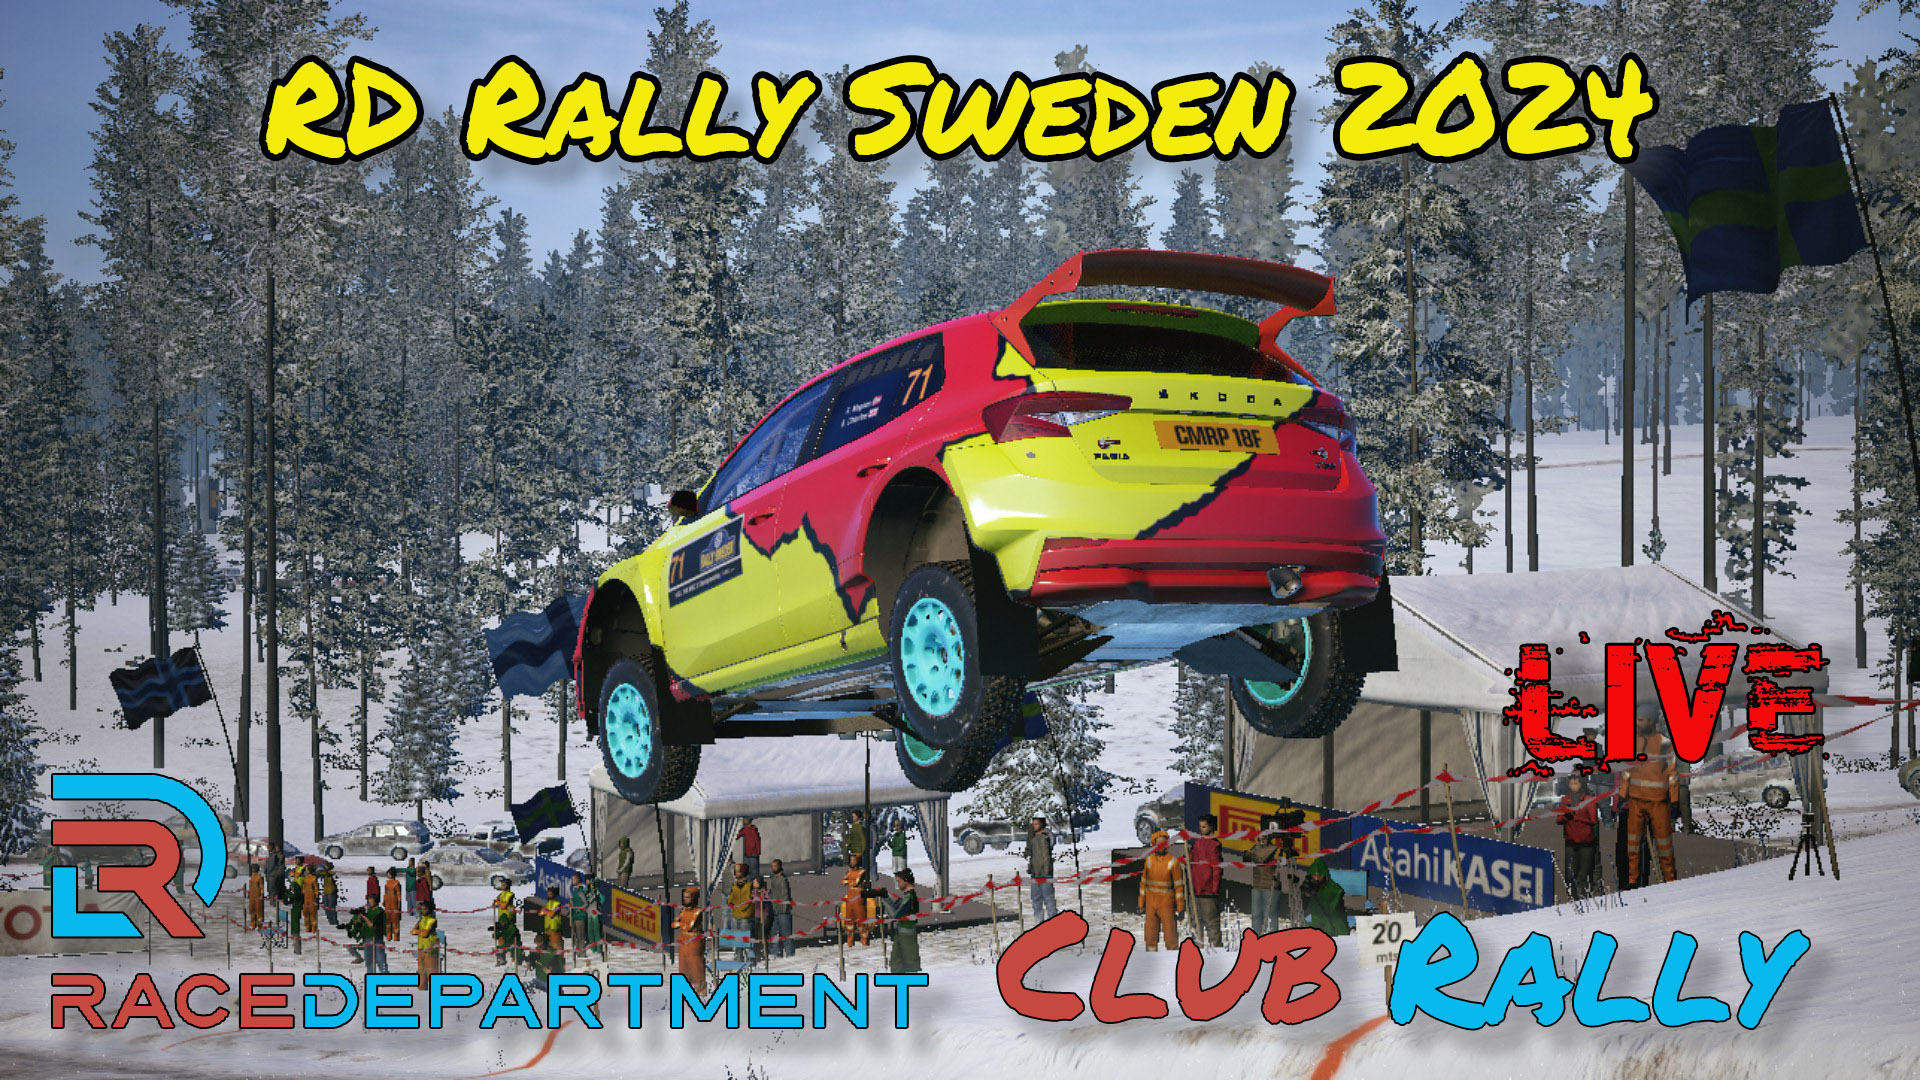 RS Rally Sweden 24.jpg